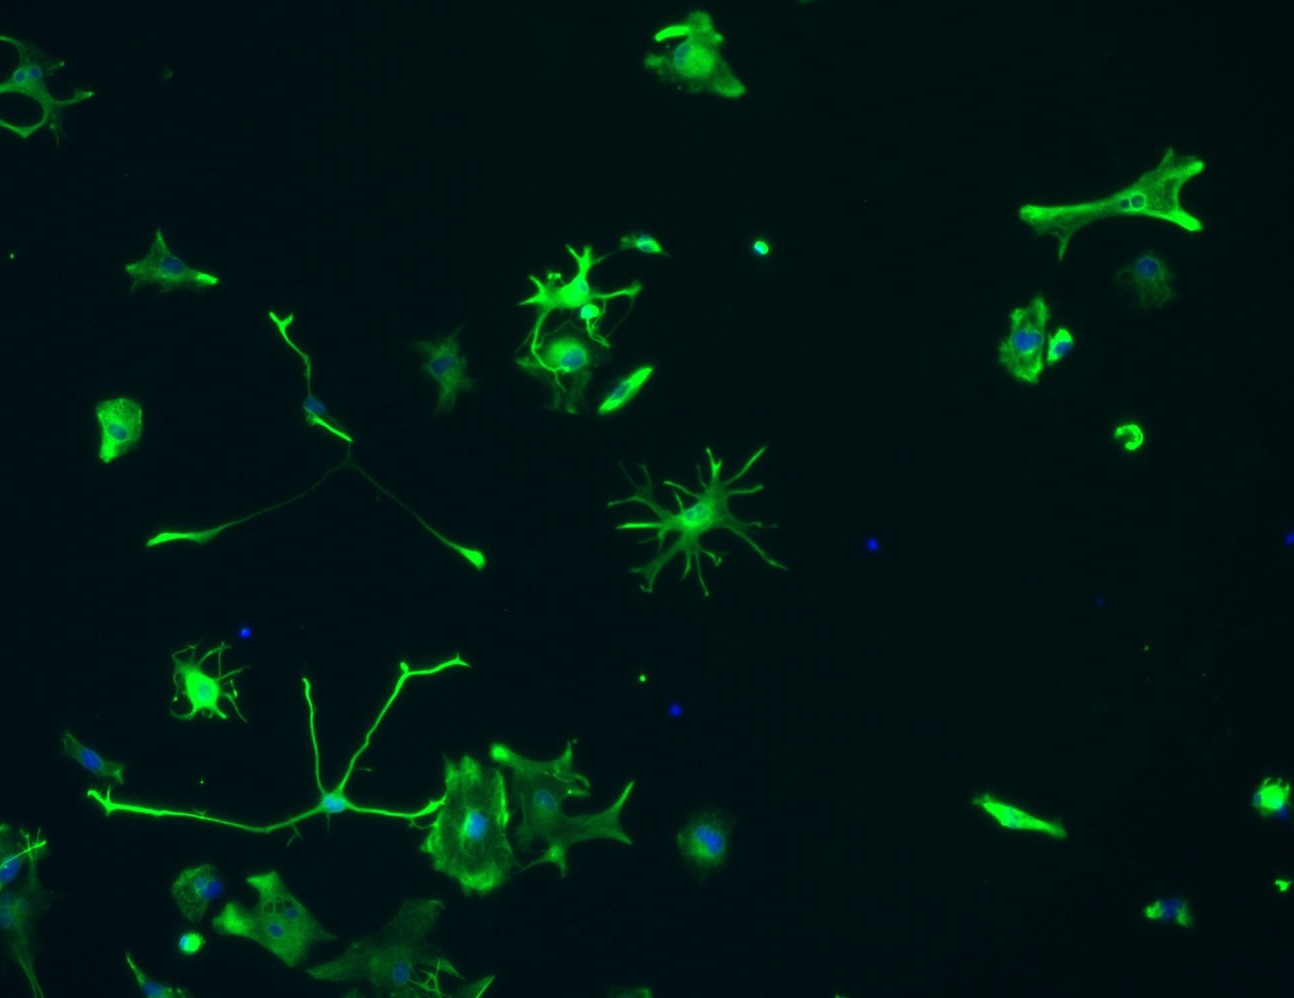 fluorescent image of astrocytes